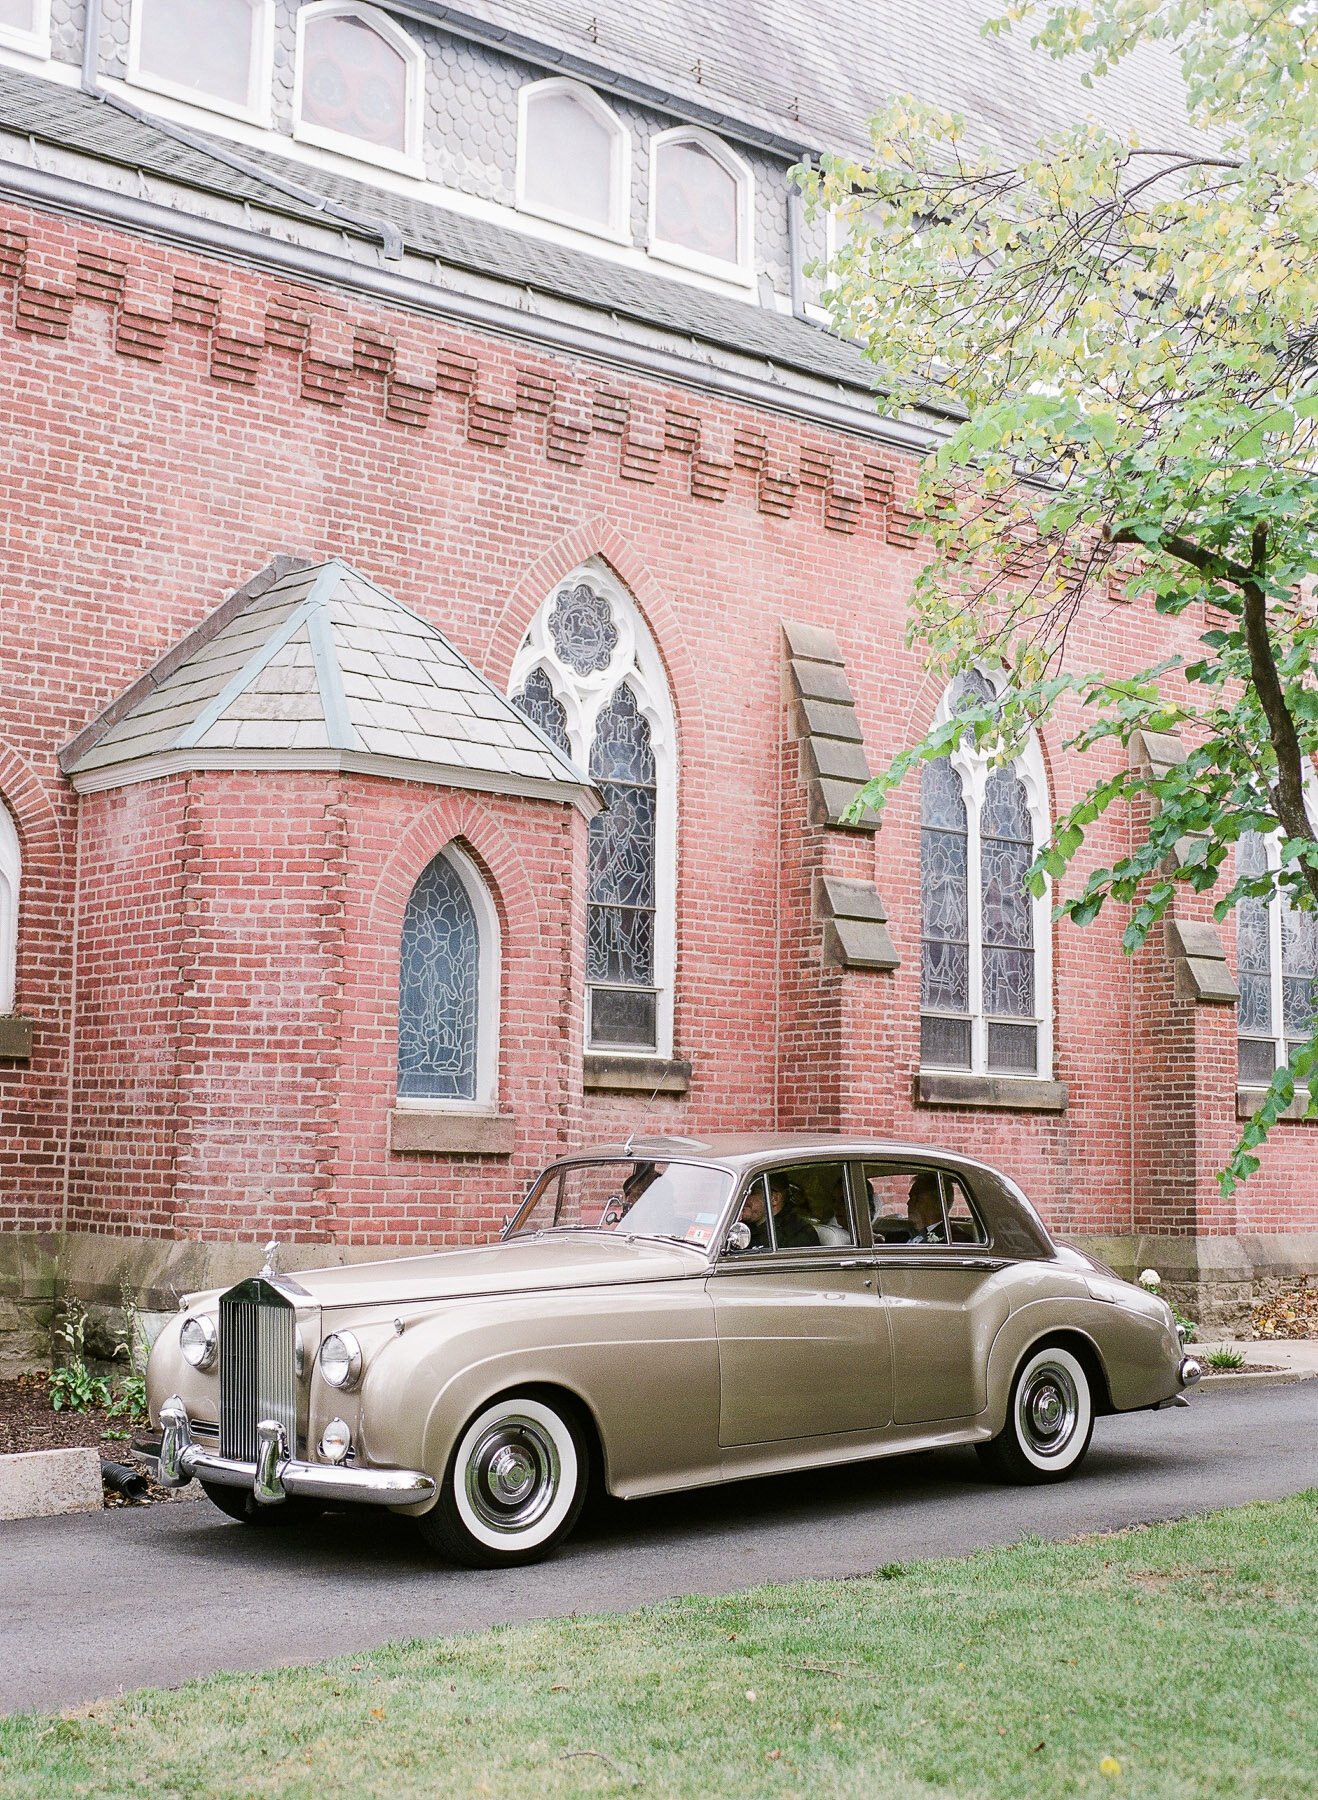 vintage car at assumption church in morristown nj